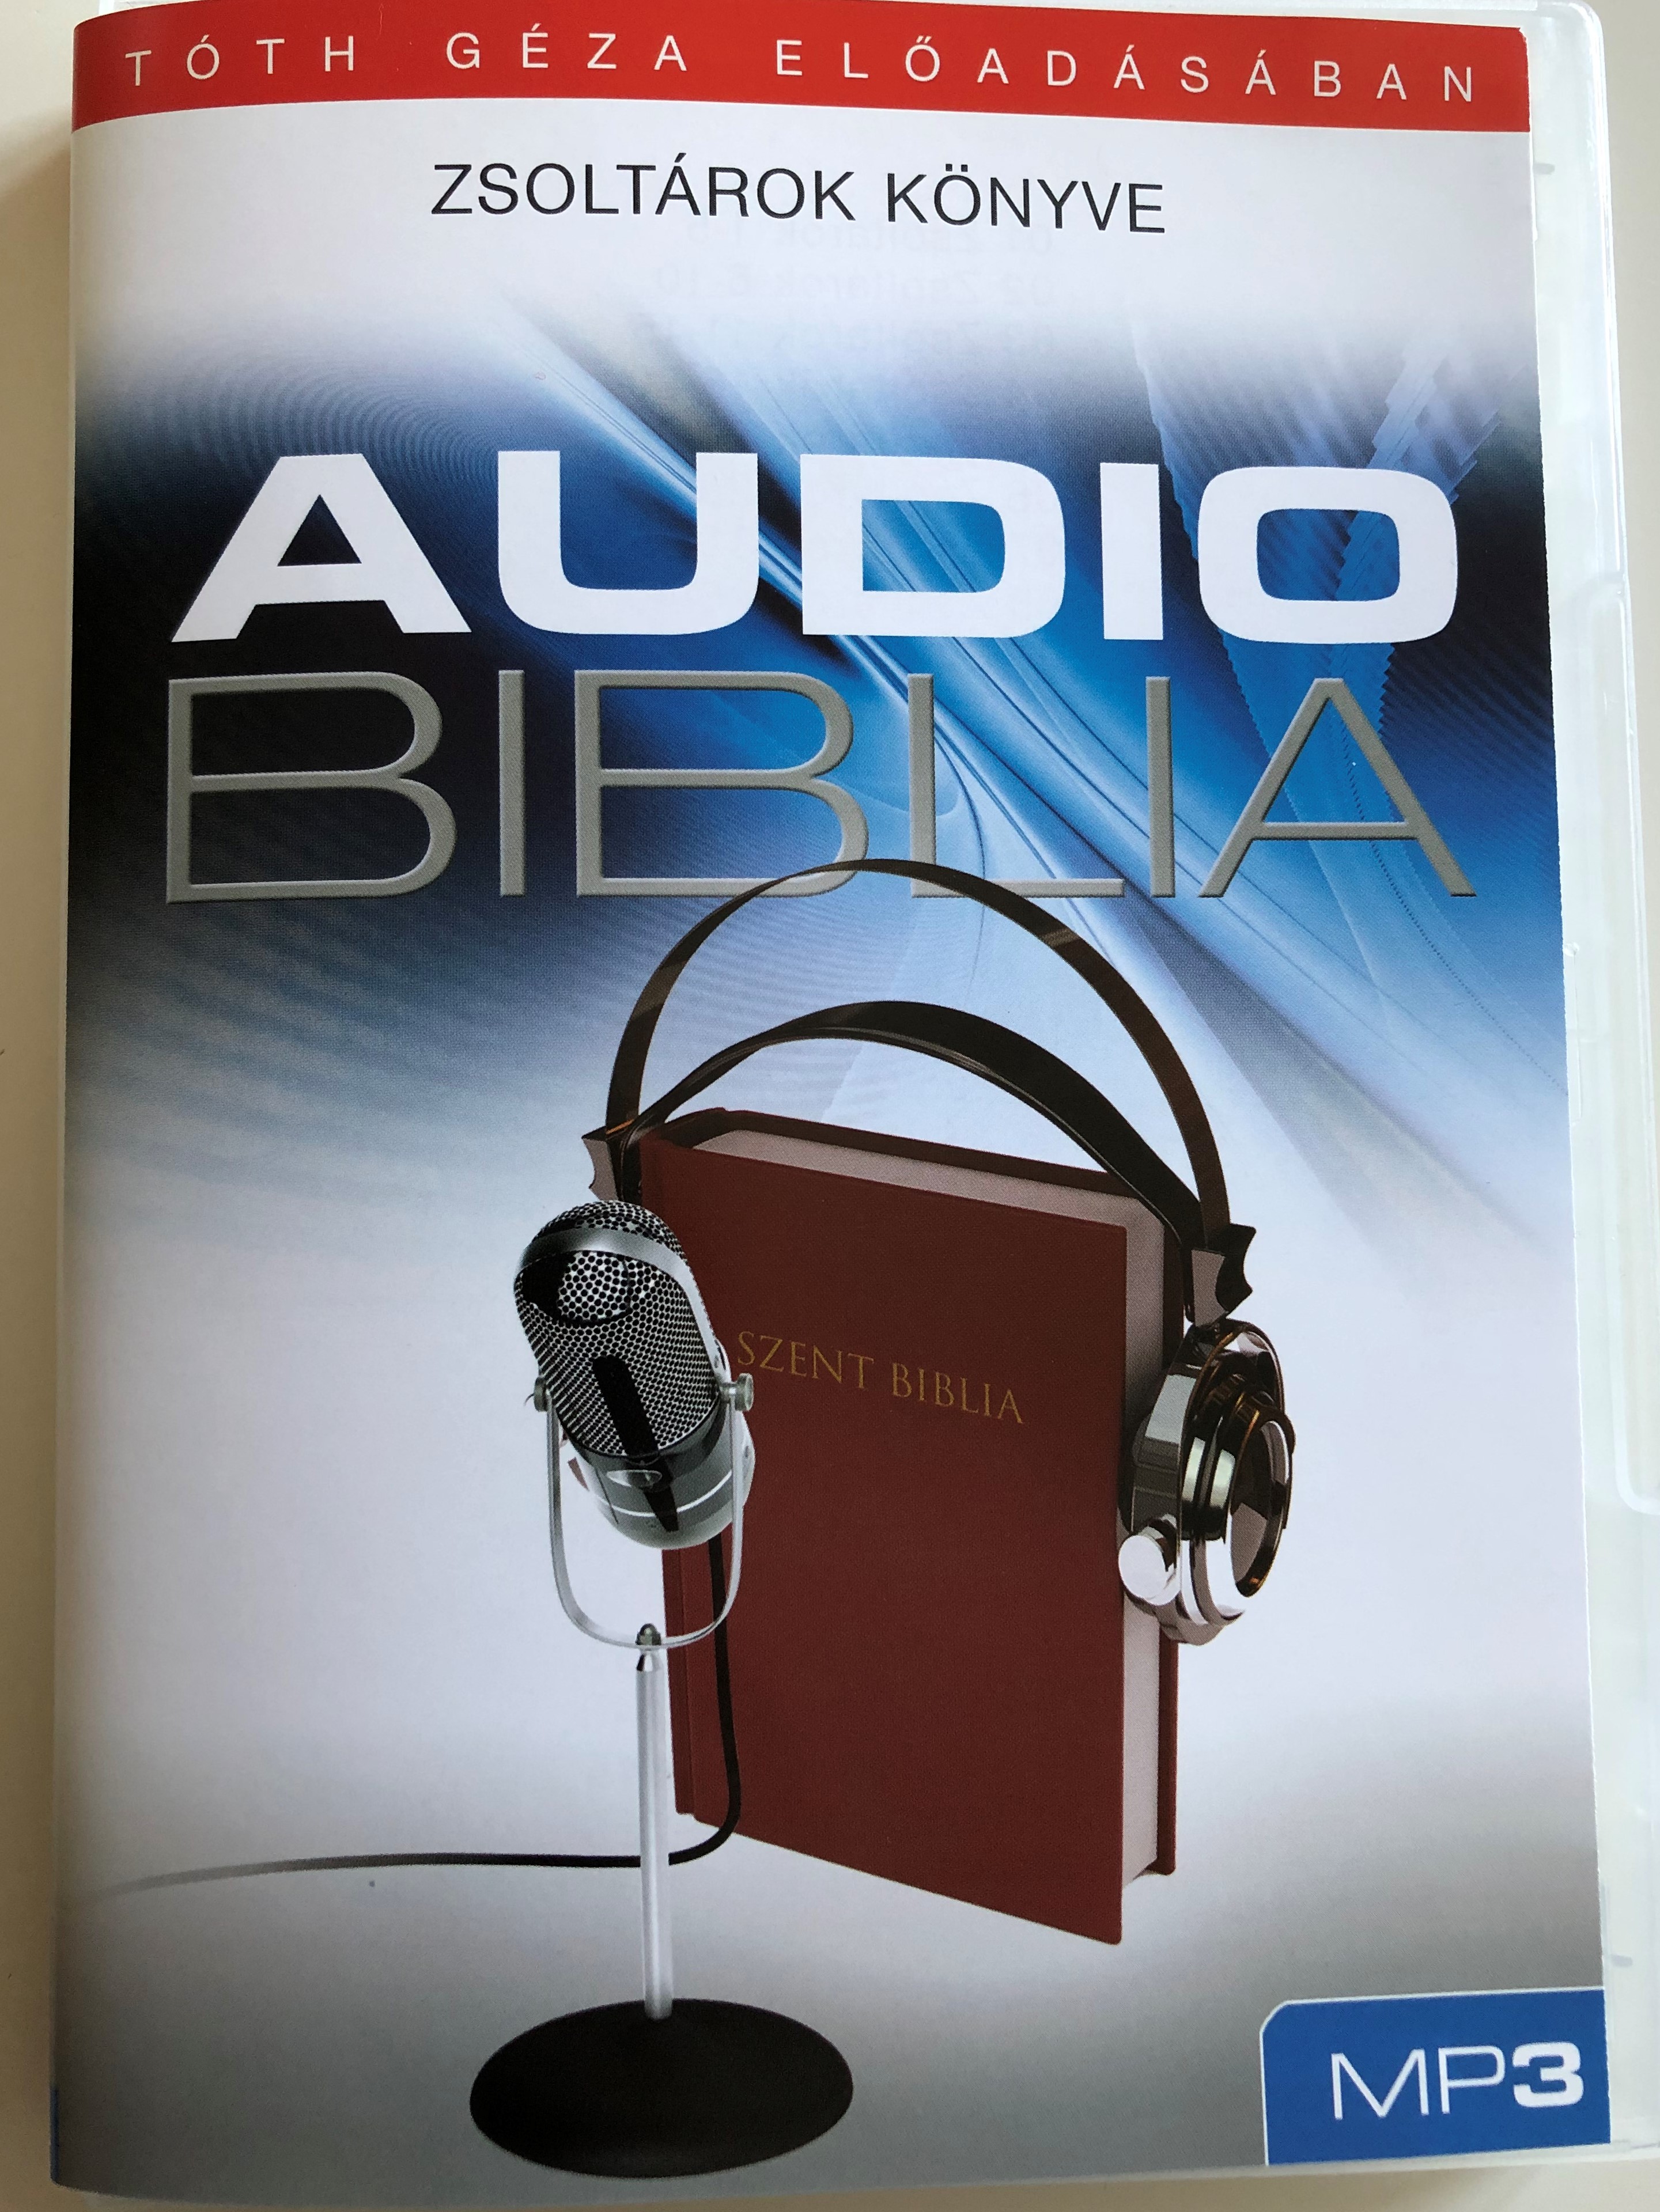 audio-biblia-zsolt-rok-k-nyve-t-th-g-za-el-ad-s-ban-hungarian-language-audio-bible-the-book-of-psalms-read-by-t-th-g-za-mp3-audio-cd-2010-audiobiblia.hu-1-.jpg